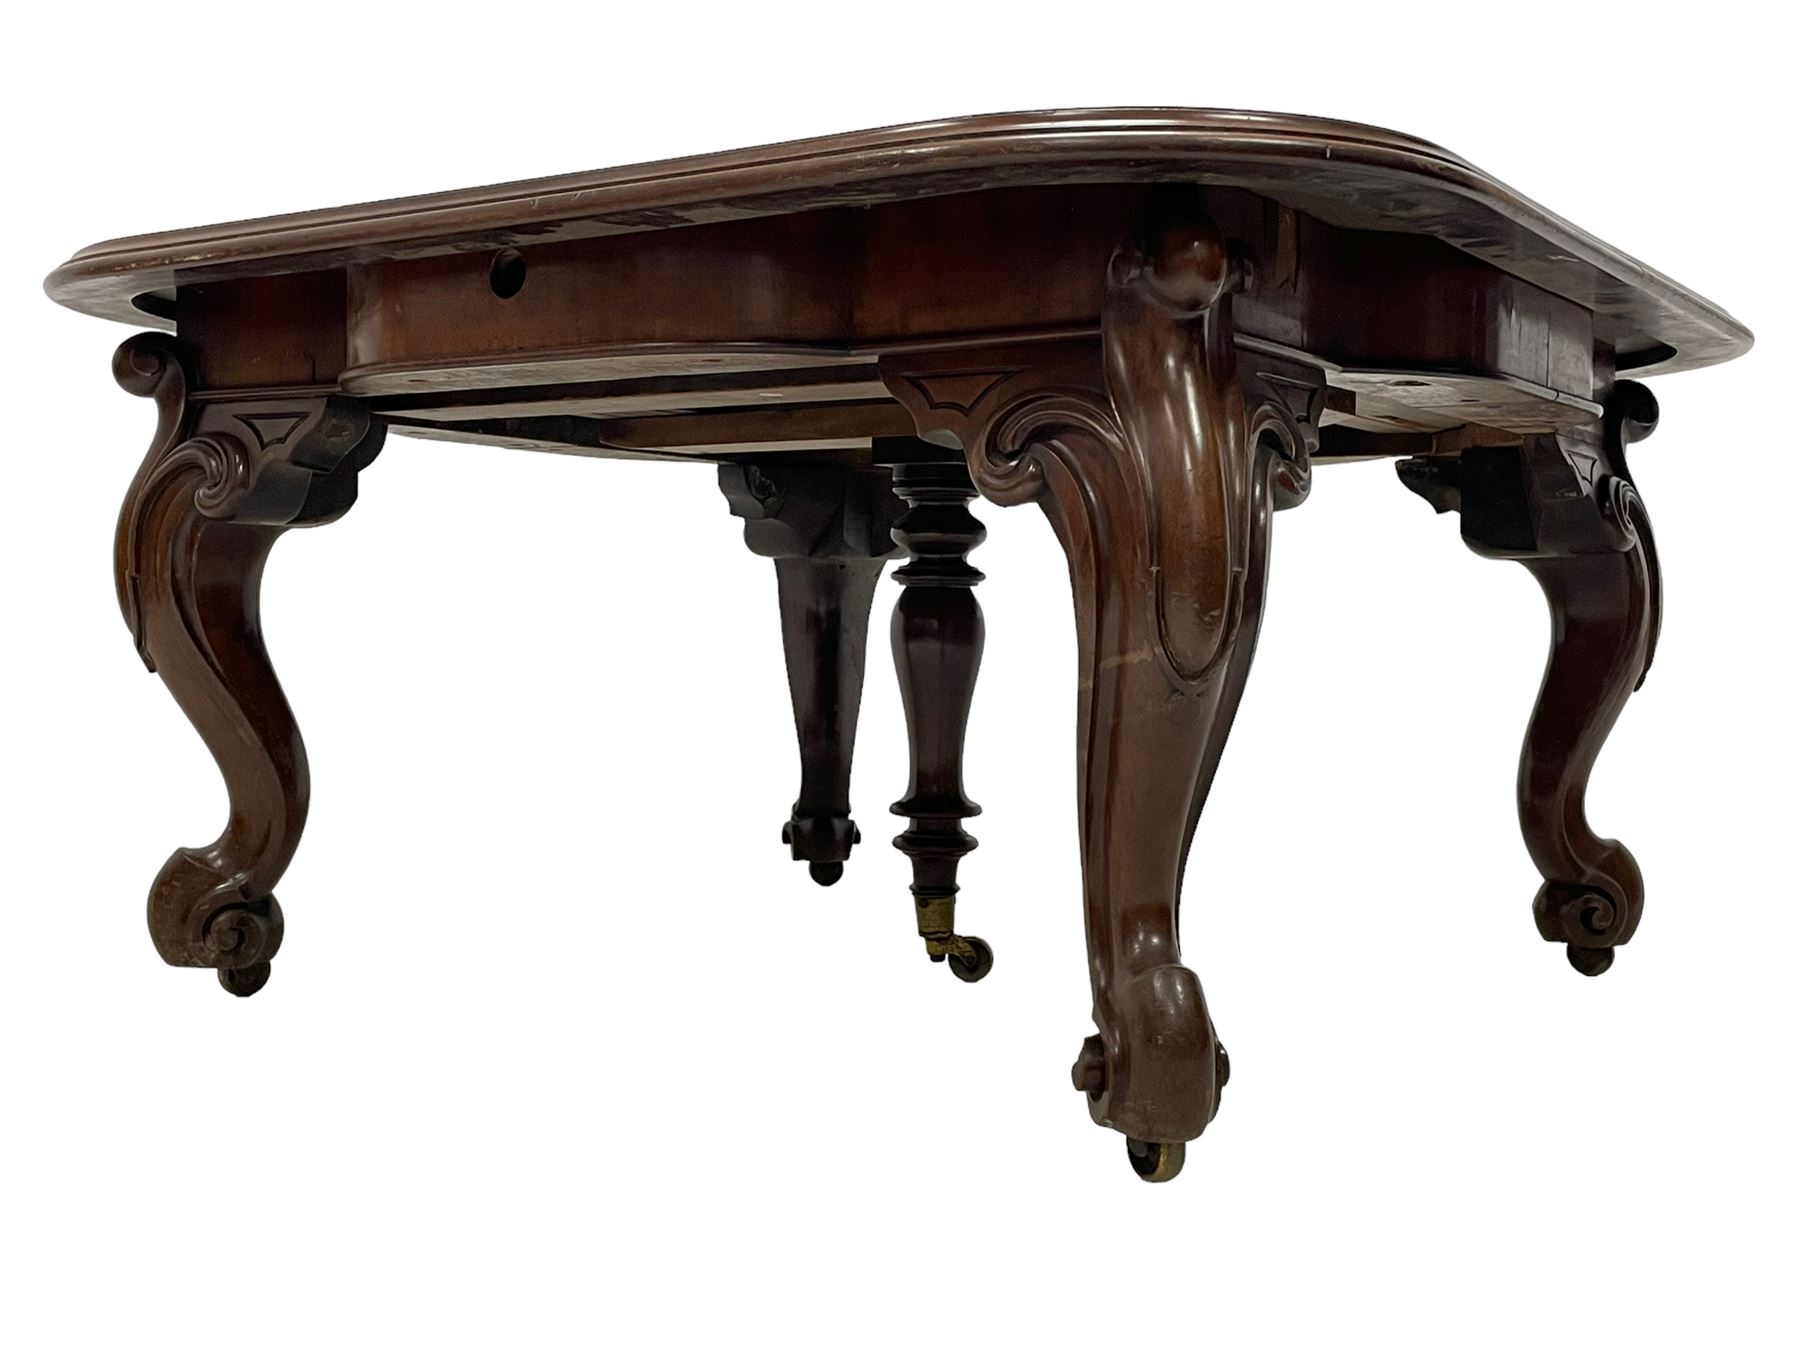 Large 19th century mahogany dining table